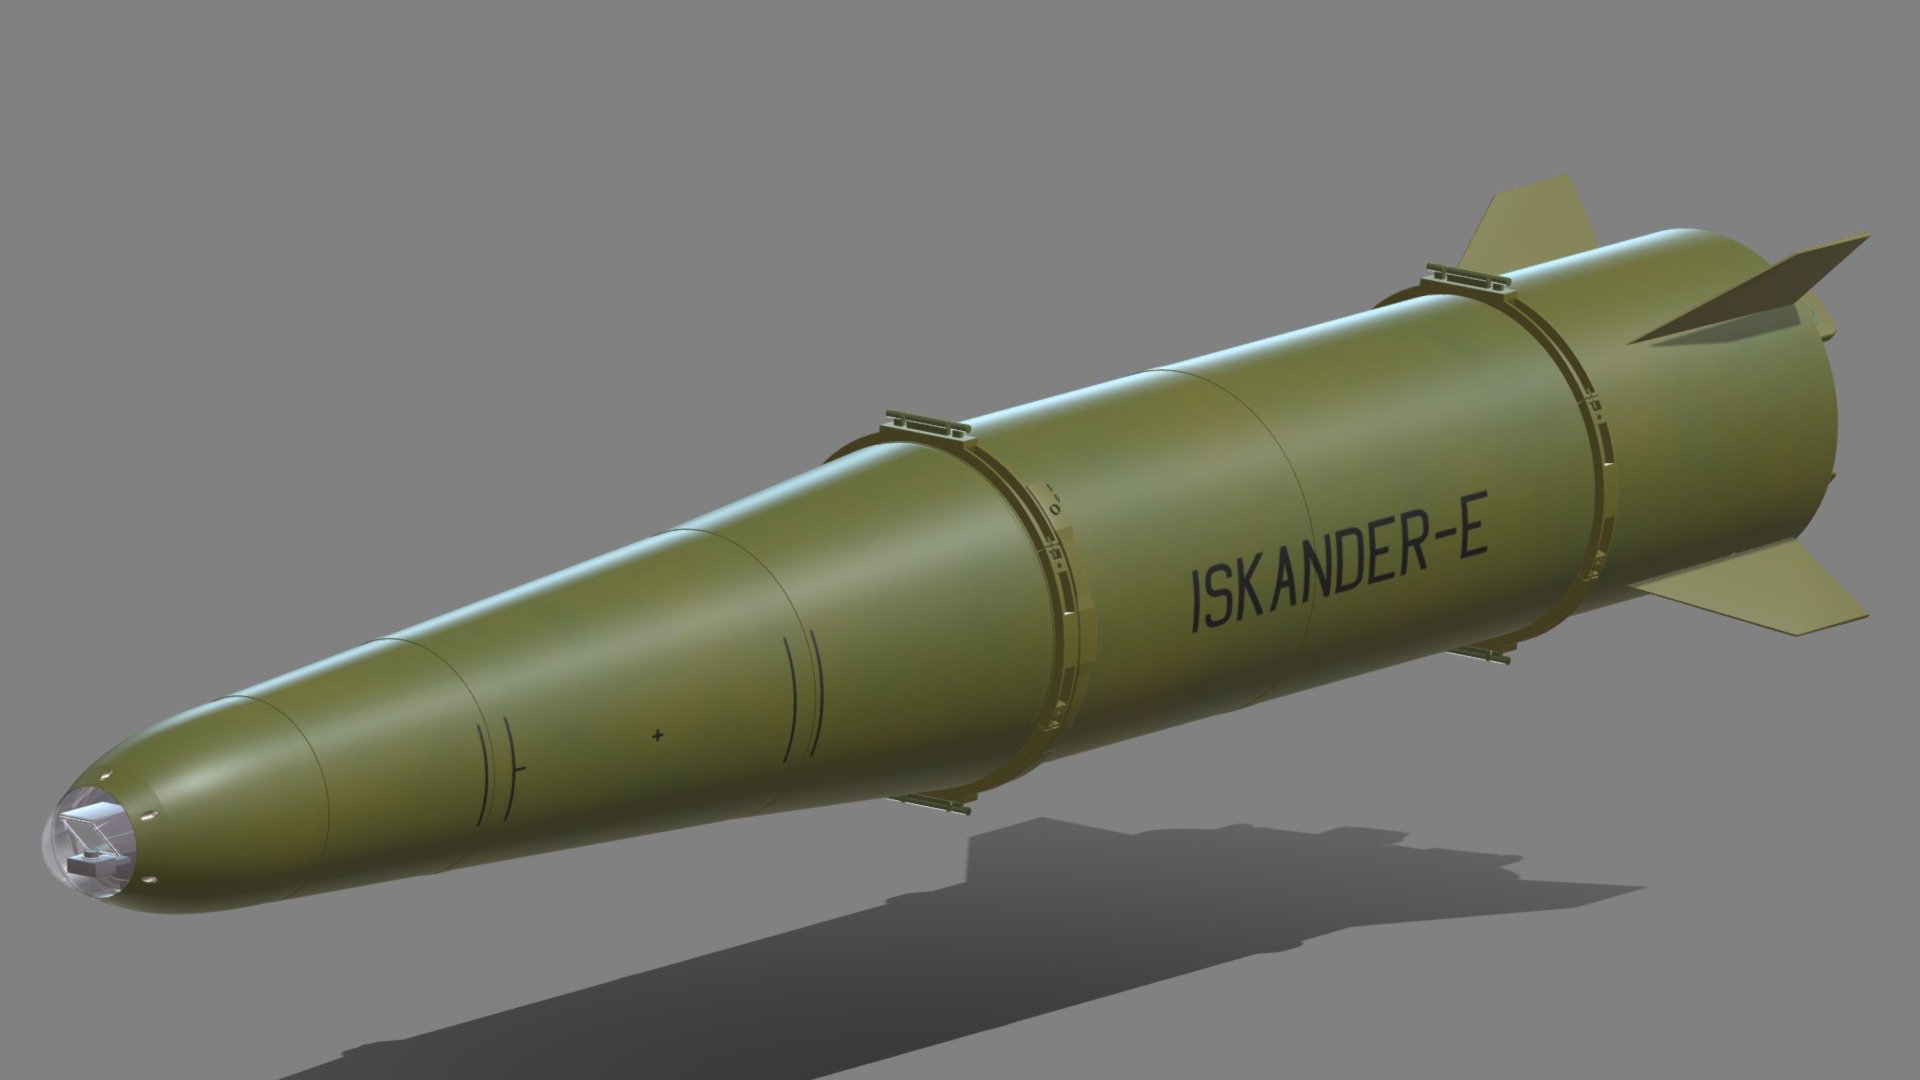 Iskander-E optical-guided ballistic missile modelled by selena3D. Link to the model: -link removed- - 9M723-1 Iskander-E ballistic missile - 3D model by Jeyhun1985 3d model